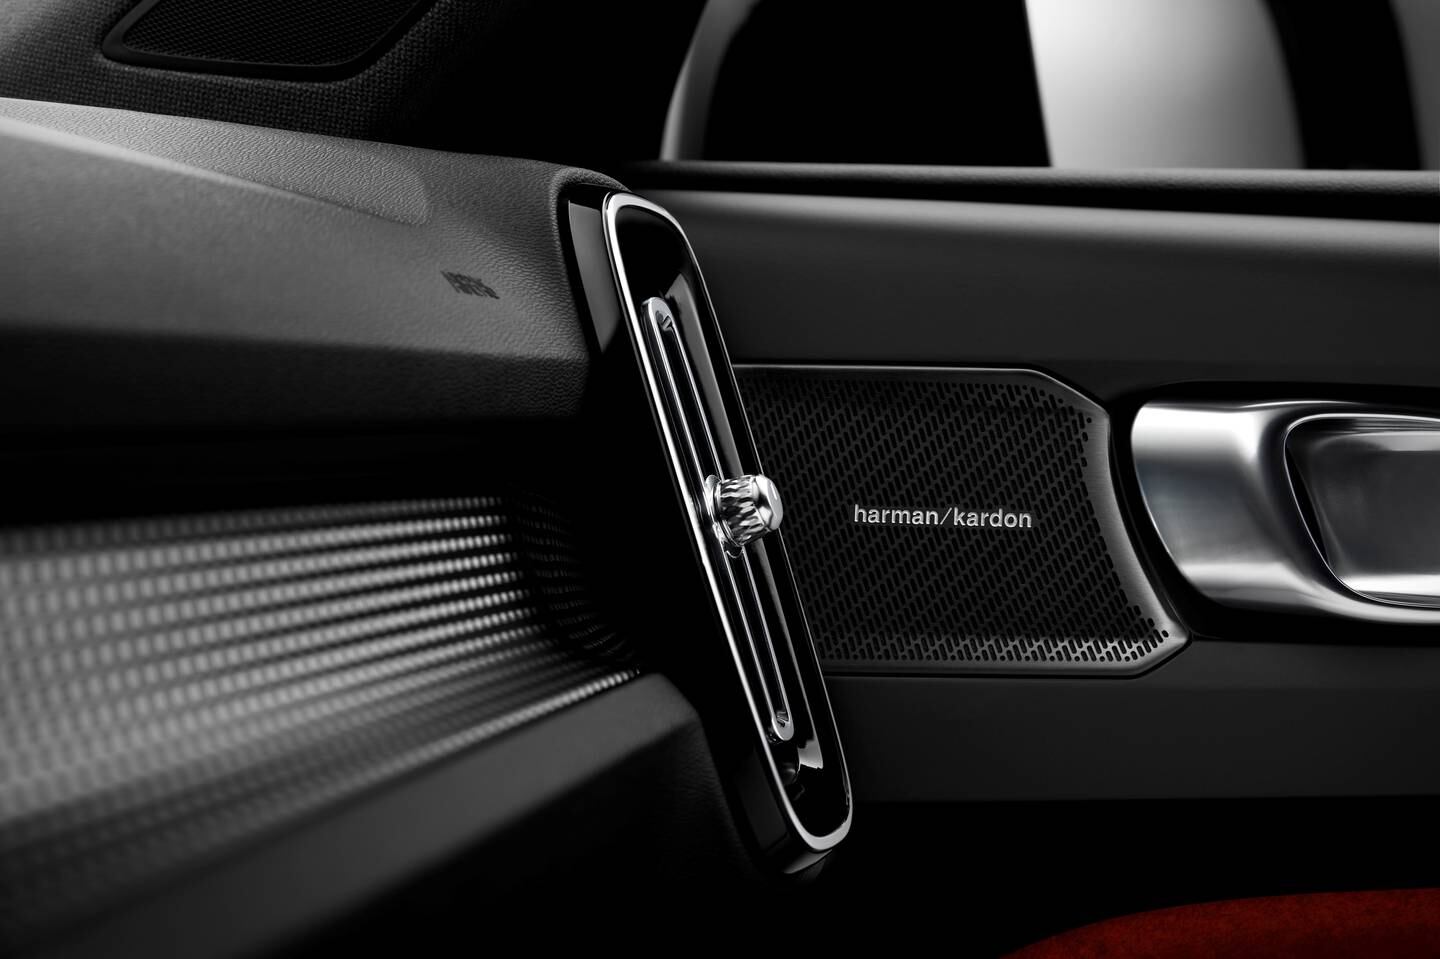 The new Volvo XC40 comes with a 13-speaker Harman Kardon premium sound system.